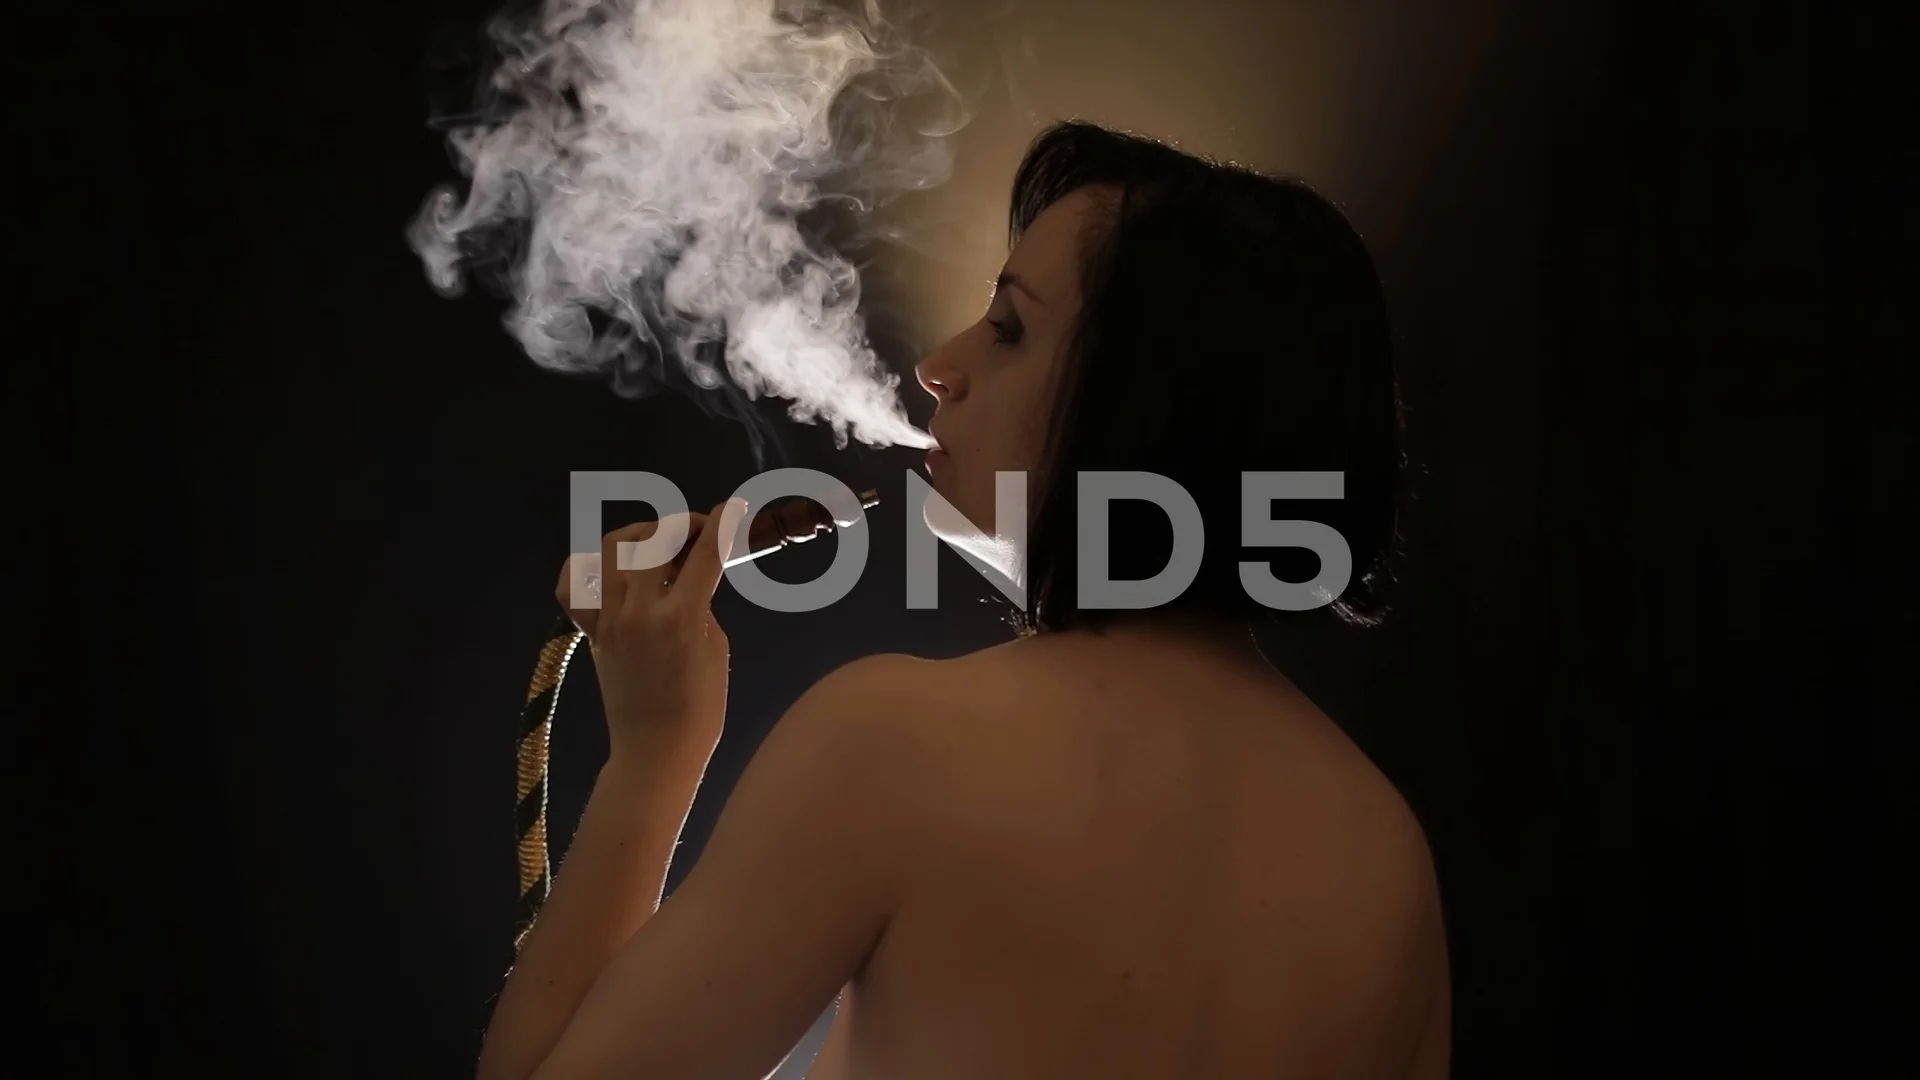 damian prince add naked women smoking cigars photo